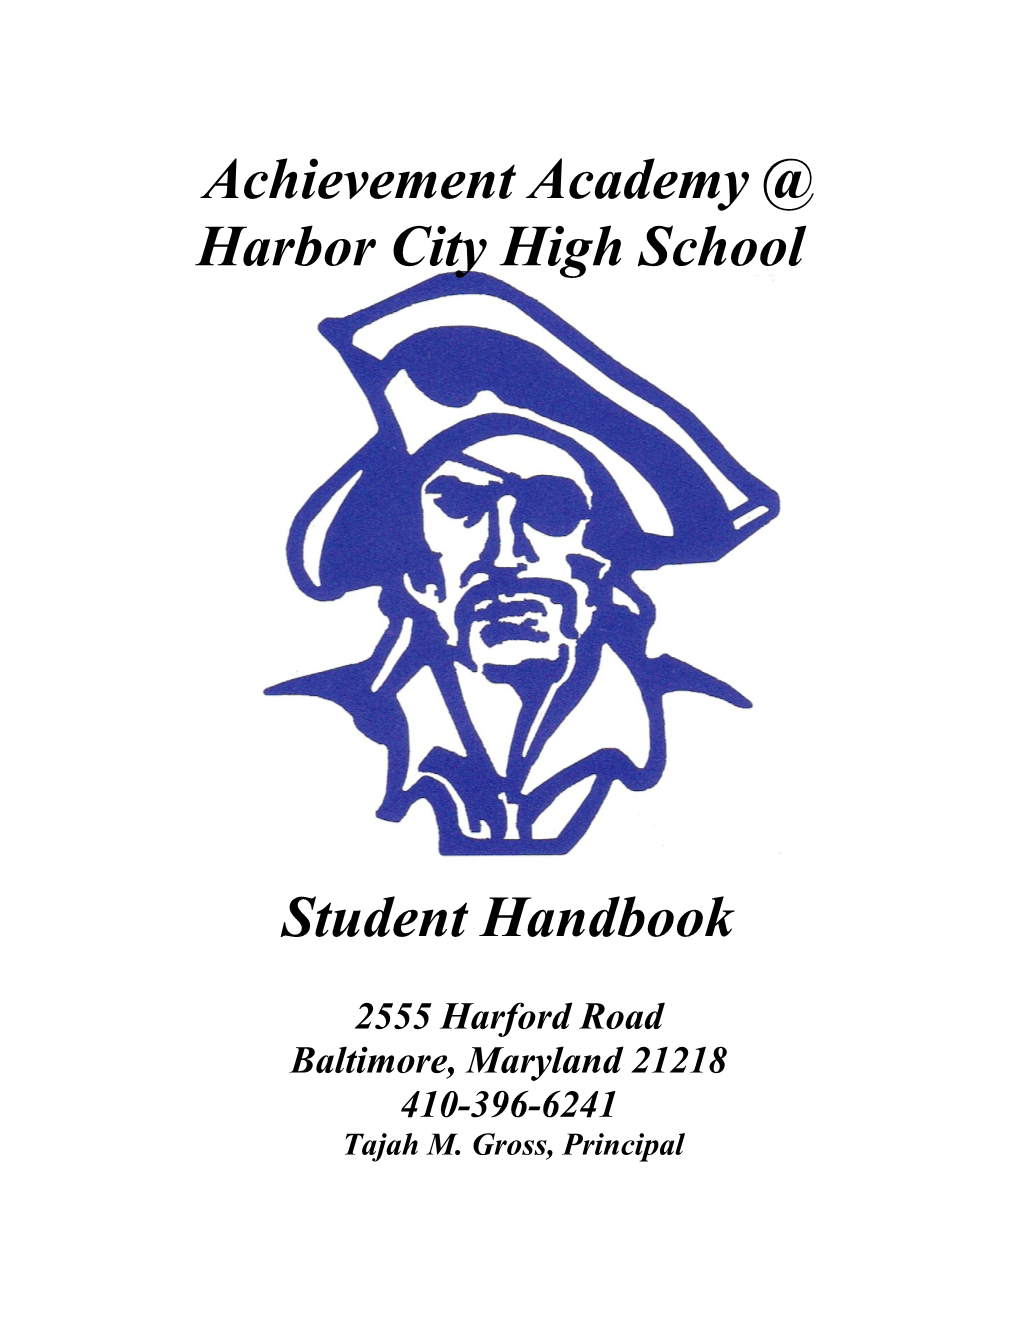 Achievement Academy at Harbor City High School